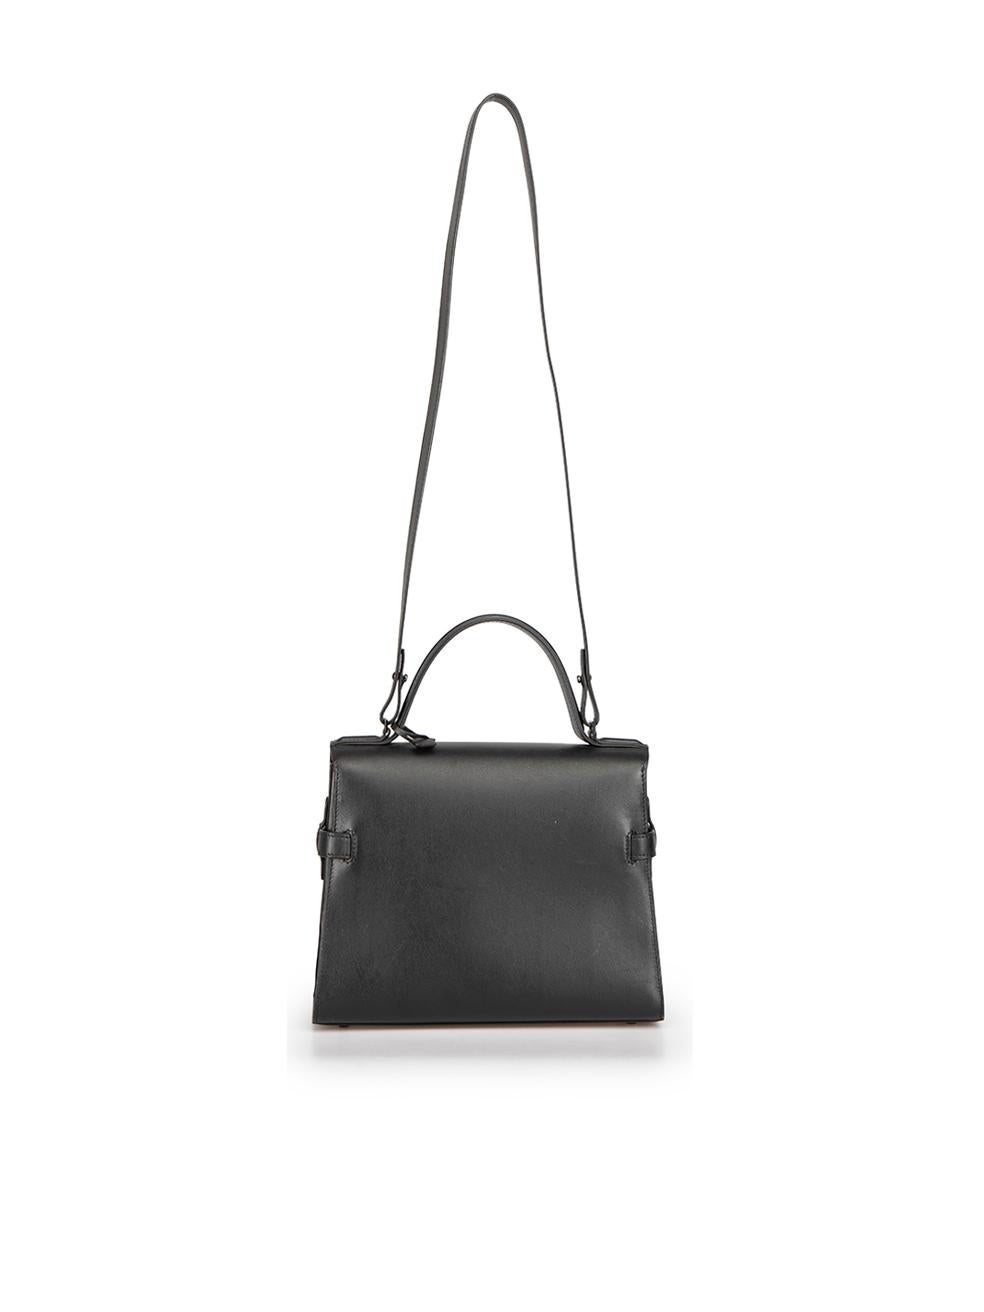 Delvaux Black Leather Le Tempête GM Bag In Excellent Condition In London, GB